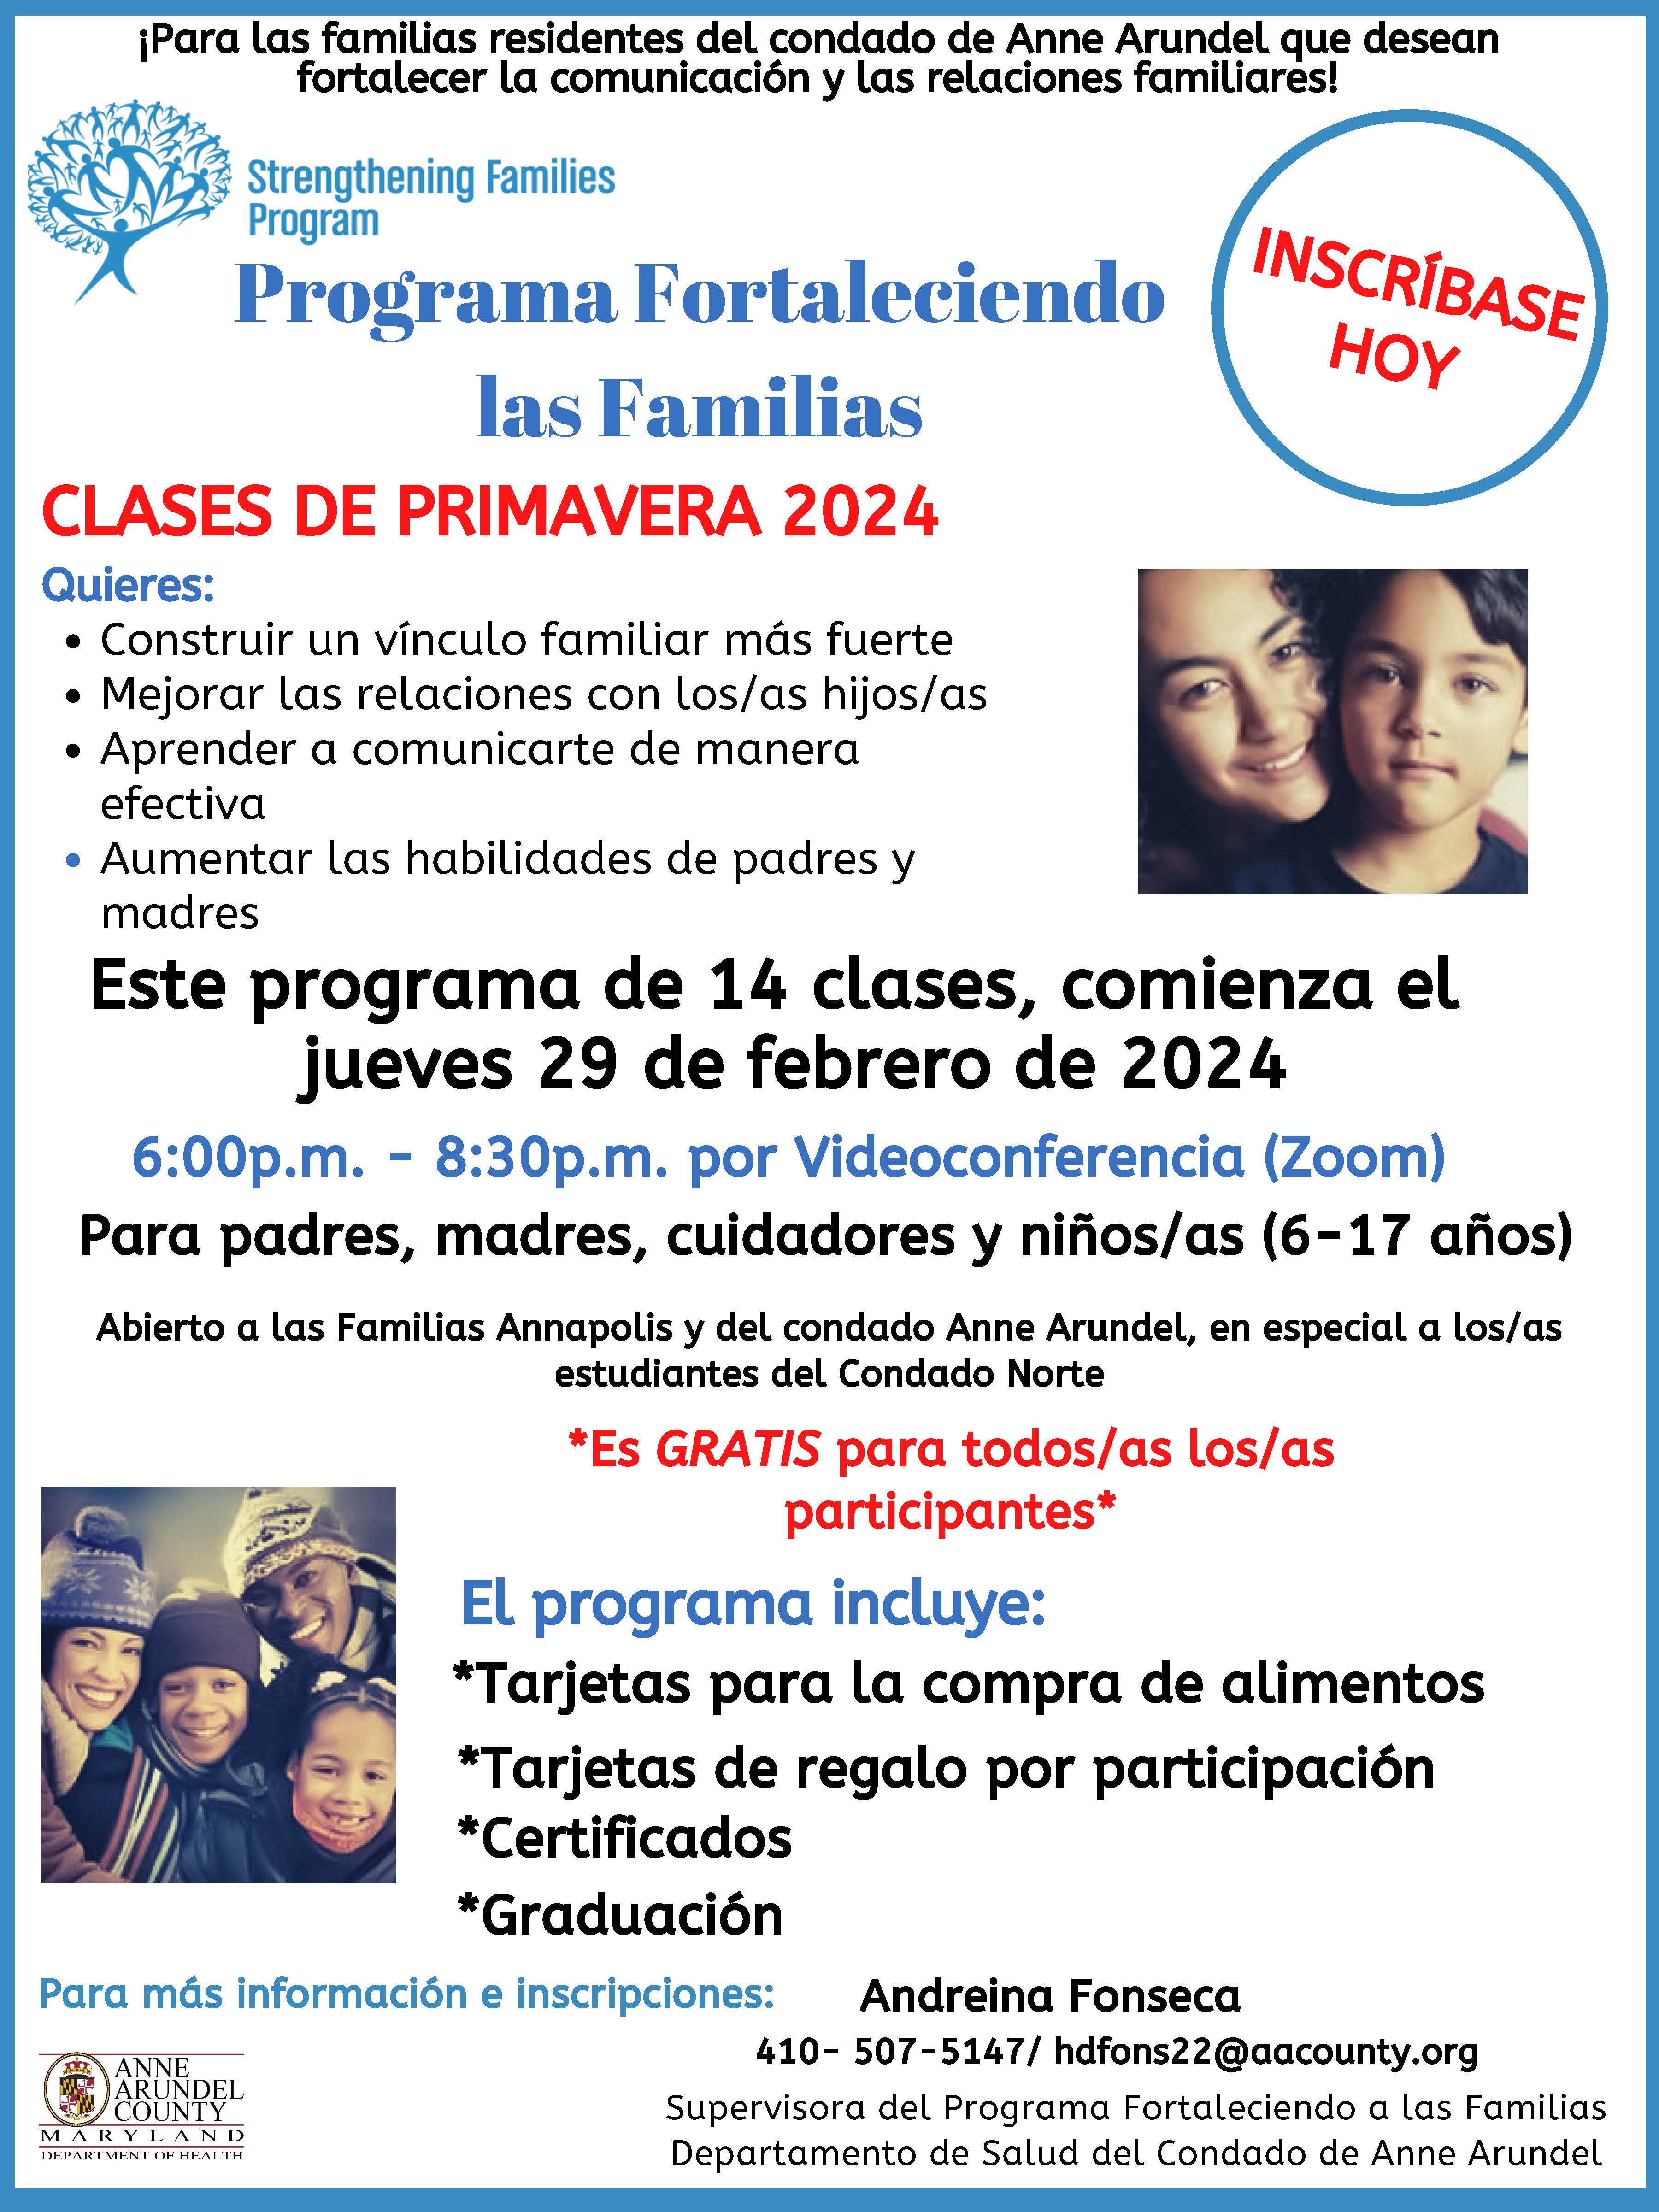 Strengthening Families Program Spring 2024 Cycle Spanish